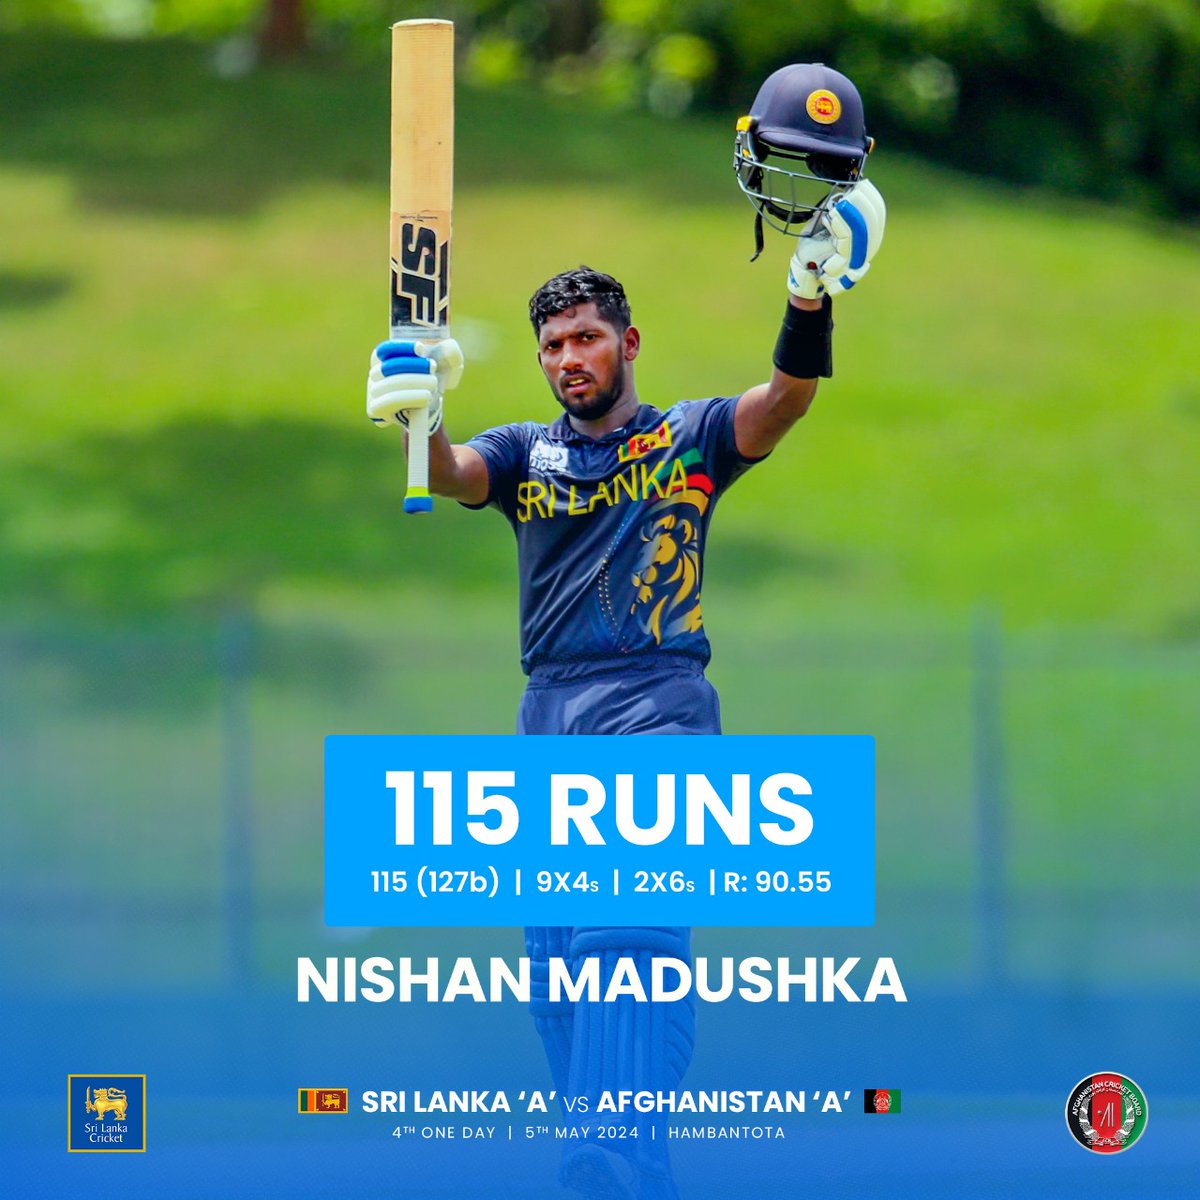 Nishan Madushka slams a brilliant 115 for Sri Lanka 'A' against Afghanistan 'A'! #SLATeam #SLvAFG